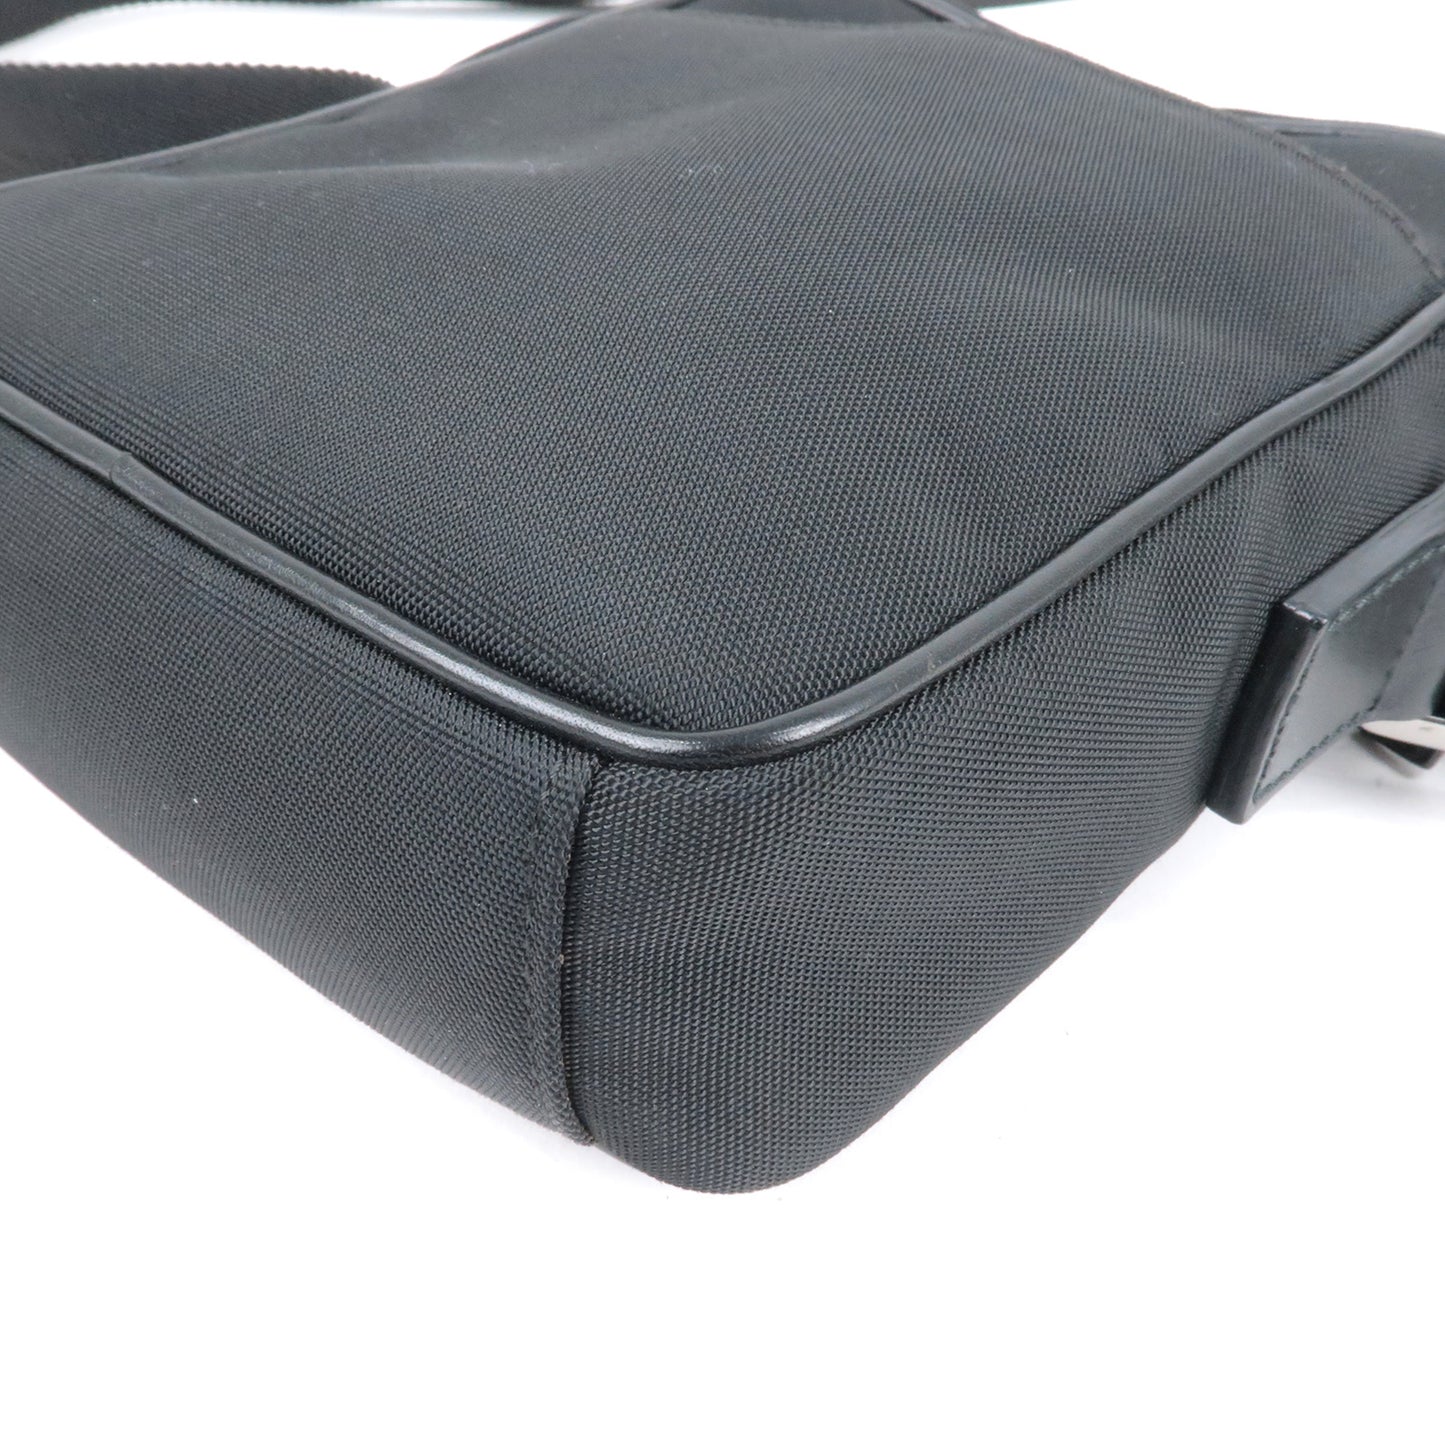 GUCCI Nylon Canvas Leather Shoulder Bag Purse Black 122754